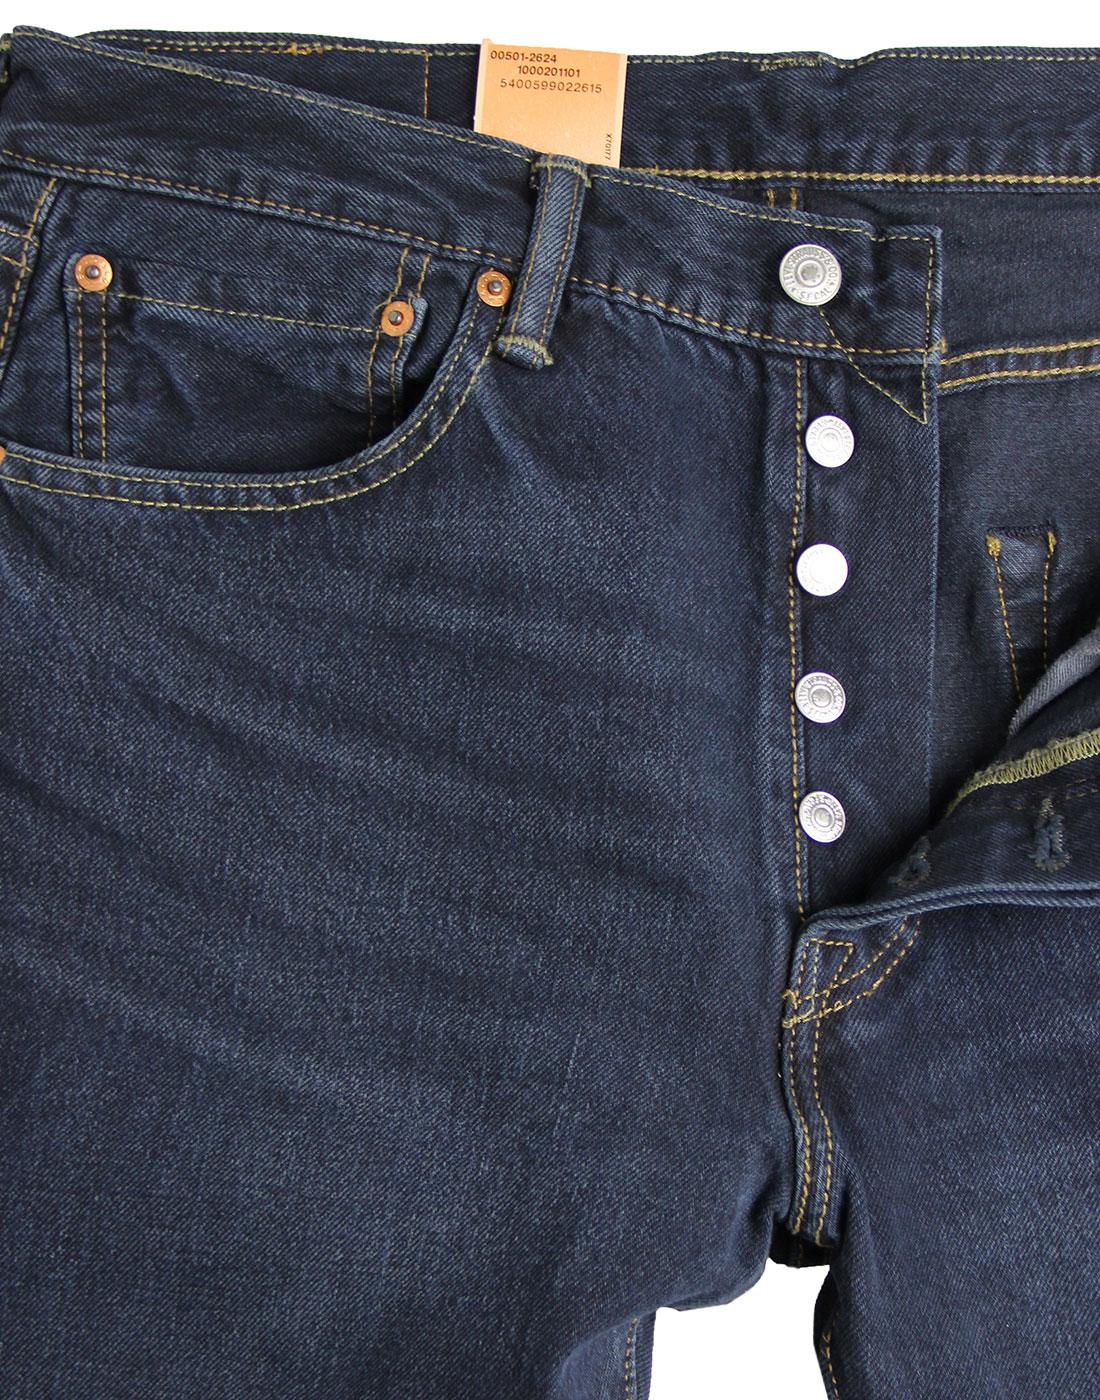 LEVI'S Men's 501 Original Straight Jeans in Dark hours